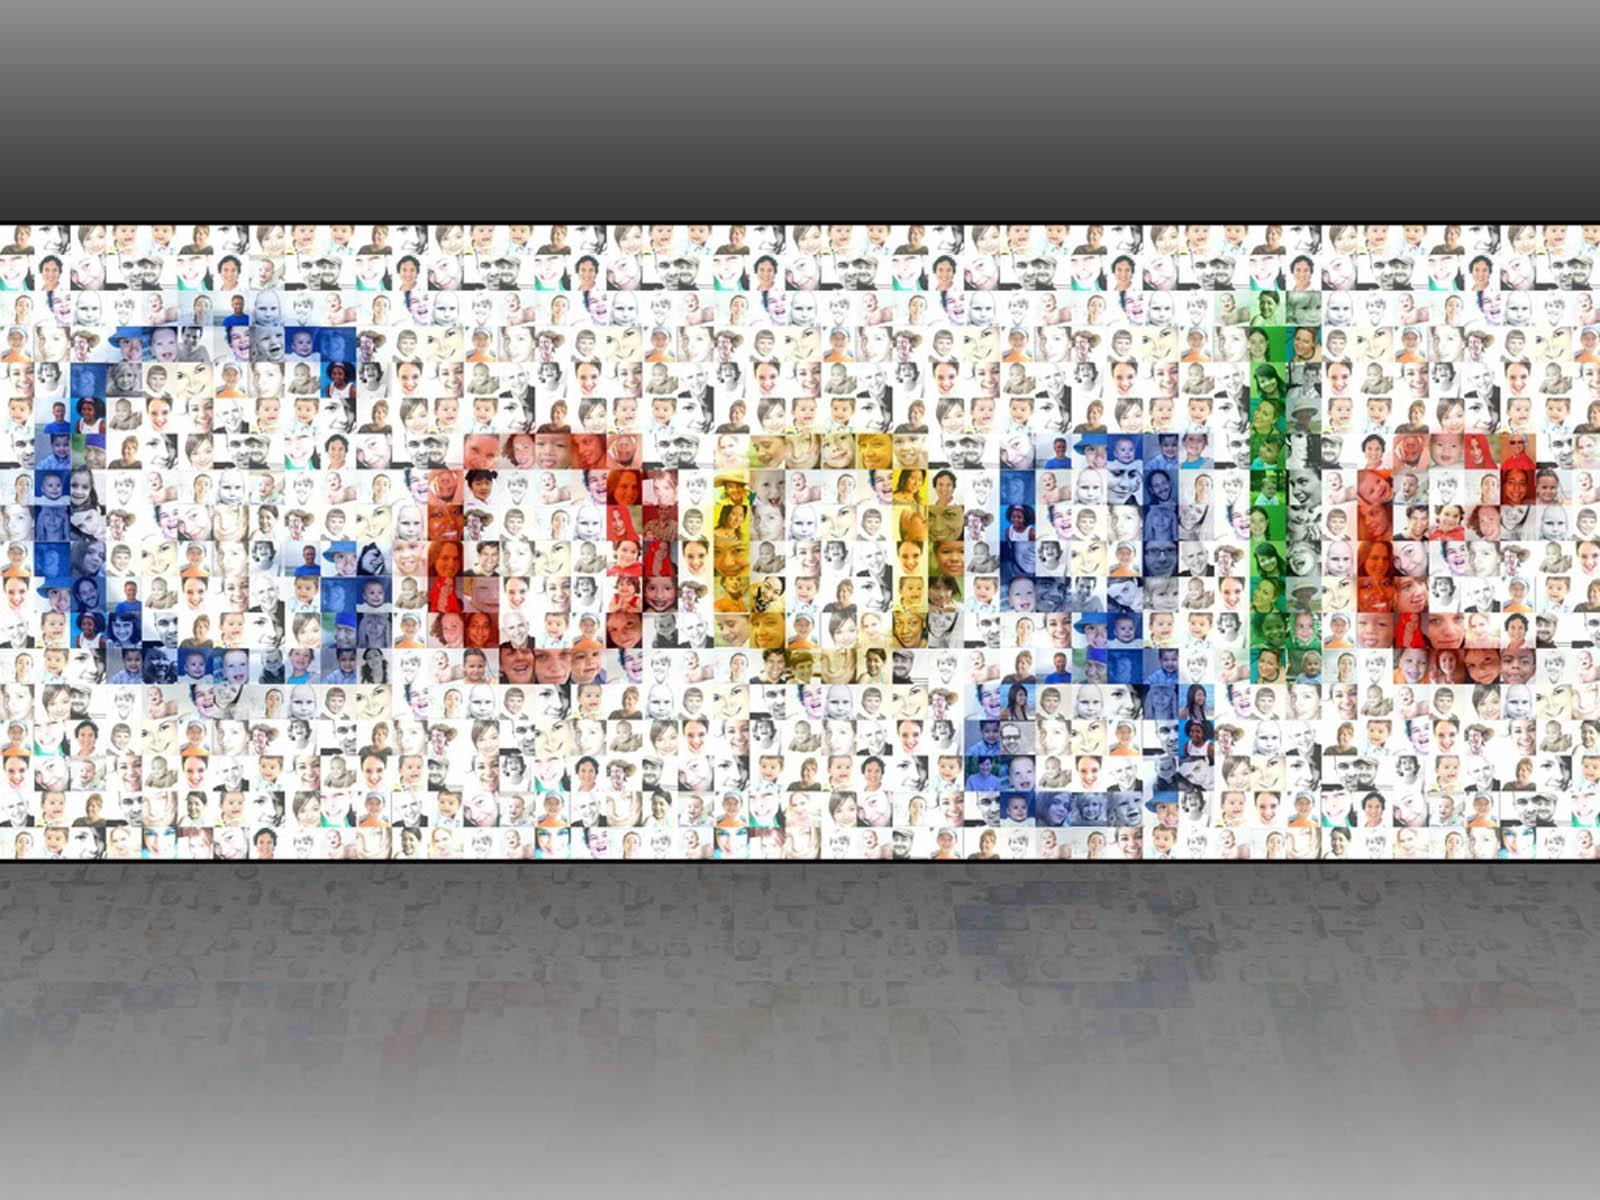 Google Desktop Background And Wallpaper